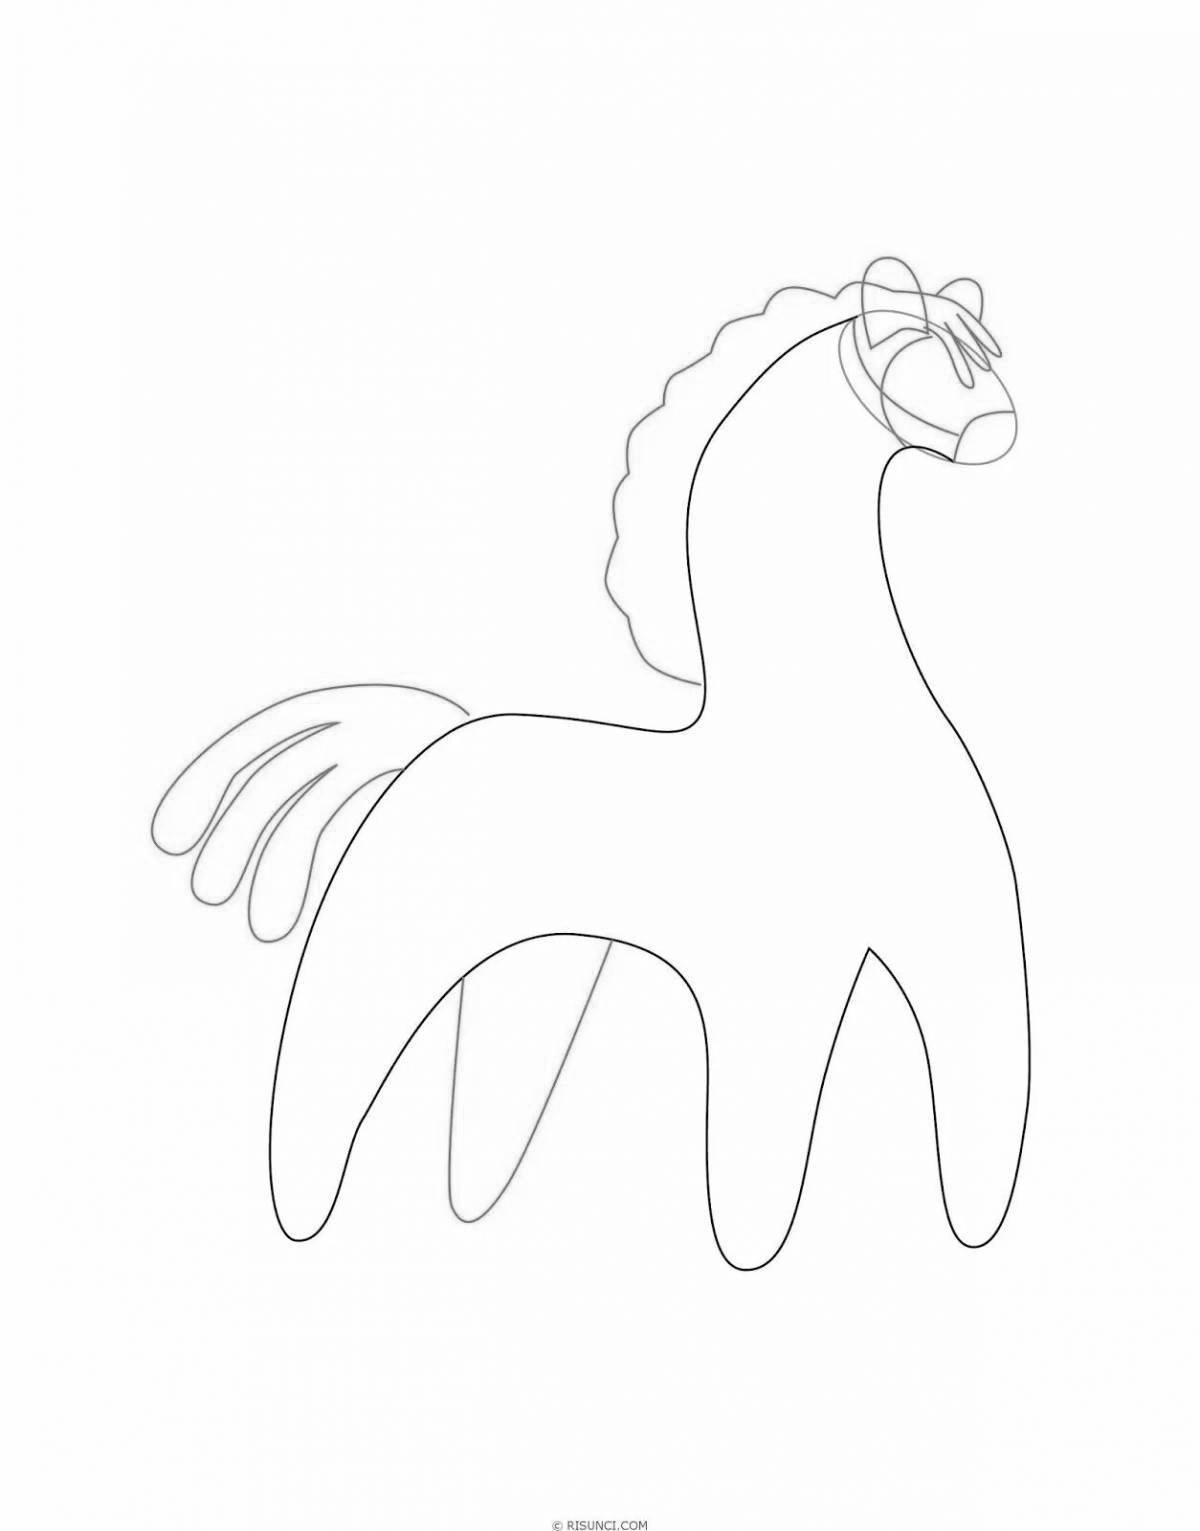 Fairytale horse philemon coloring book for preschoolers